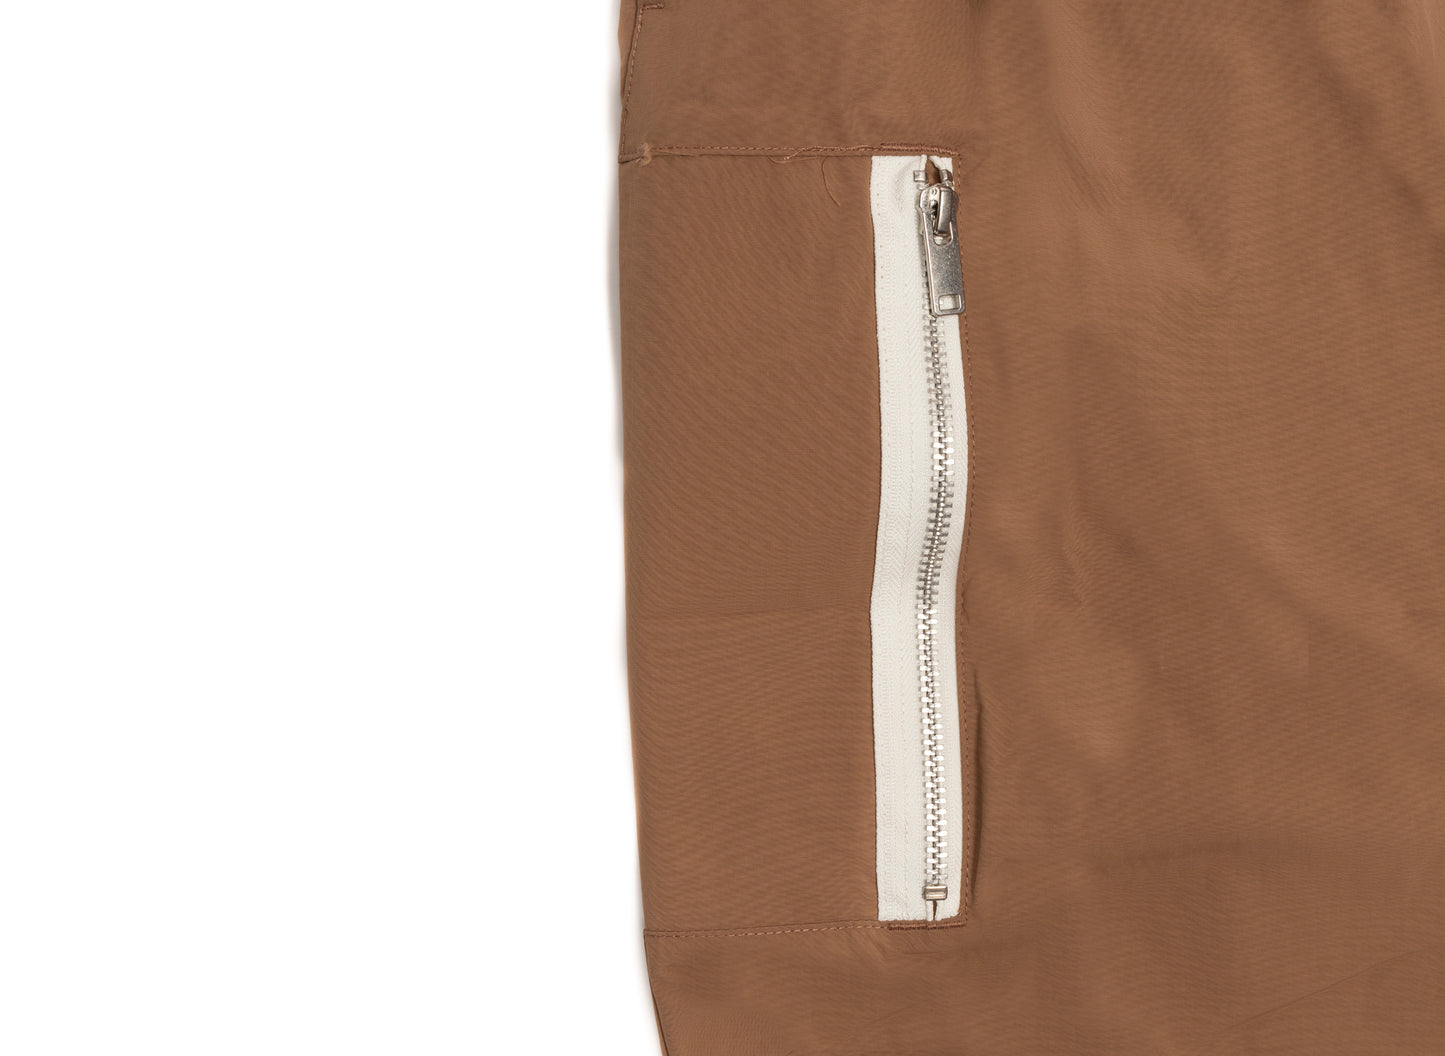 Nike Sportswear Style Essentials Utility Pants